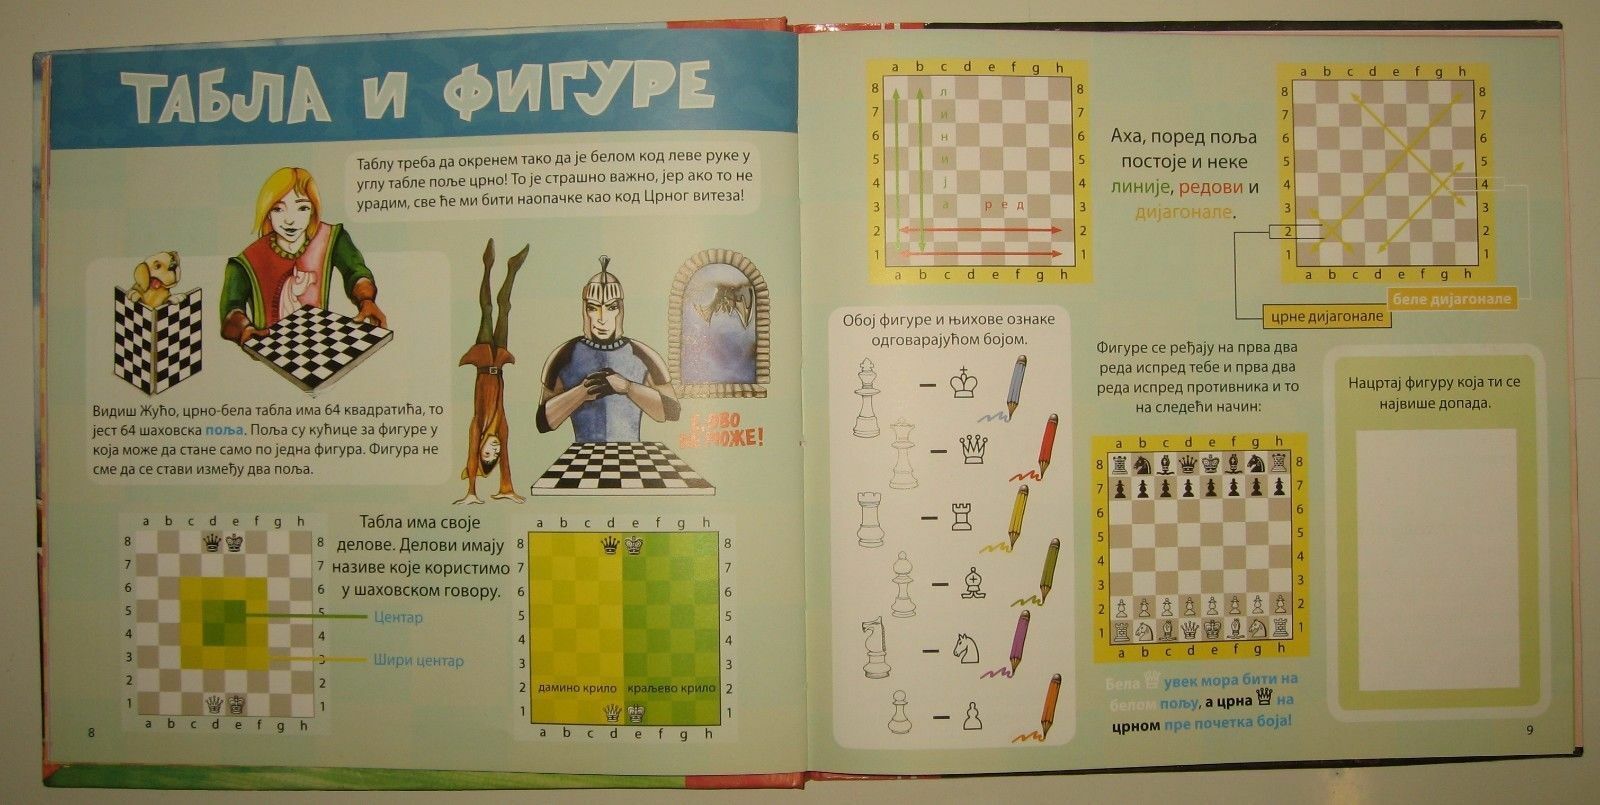 11621.Serbian Chess Book: S. Vuksanovic, I. Markovic. Three, four, shame, chess. 2007